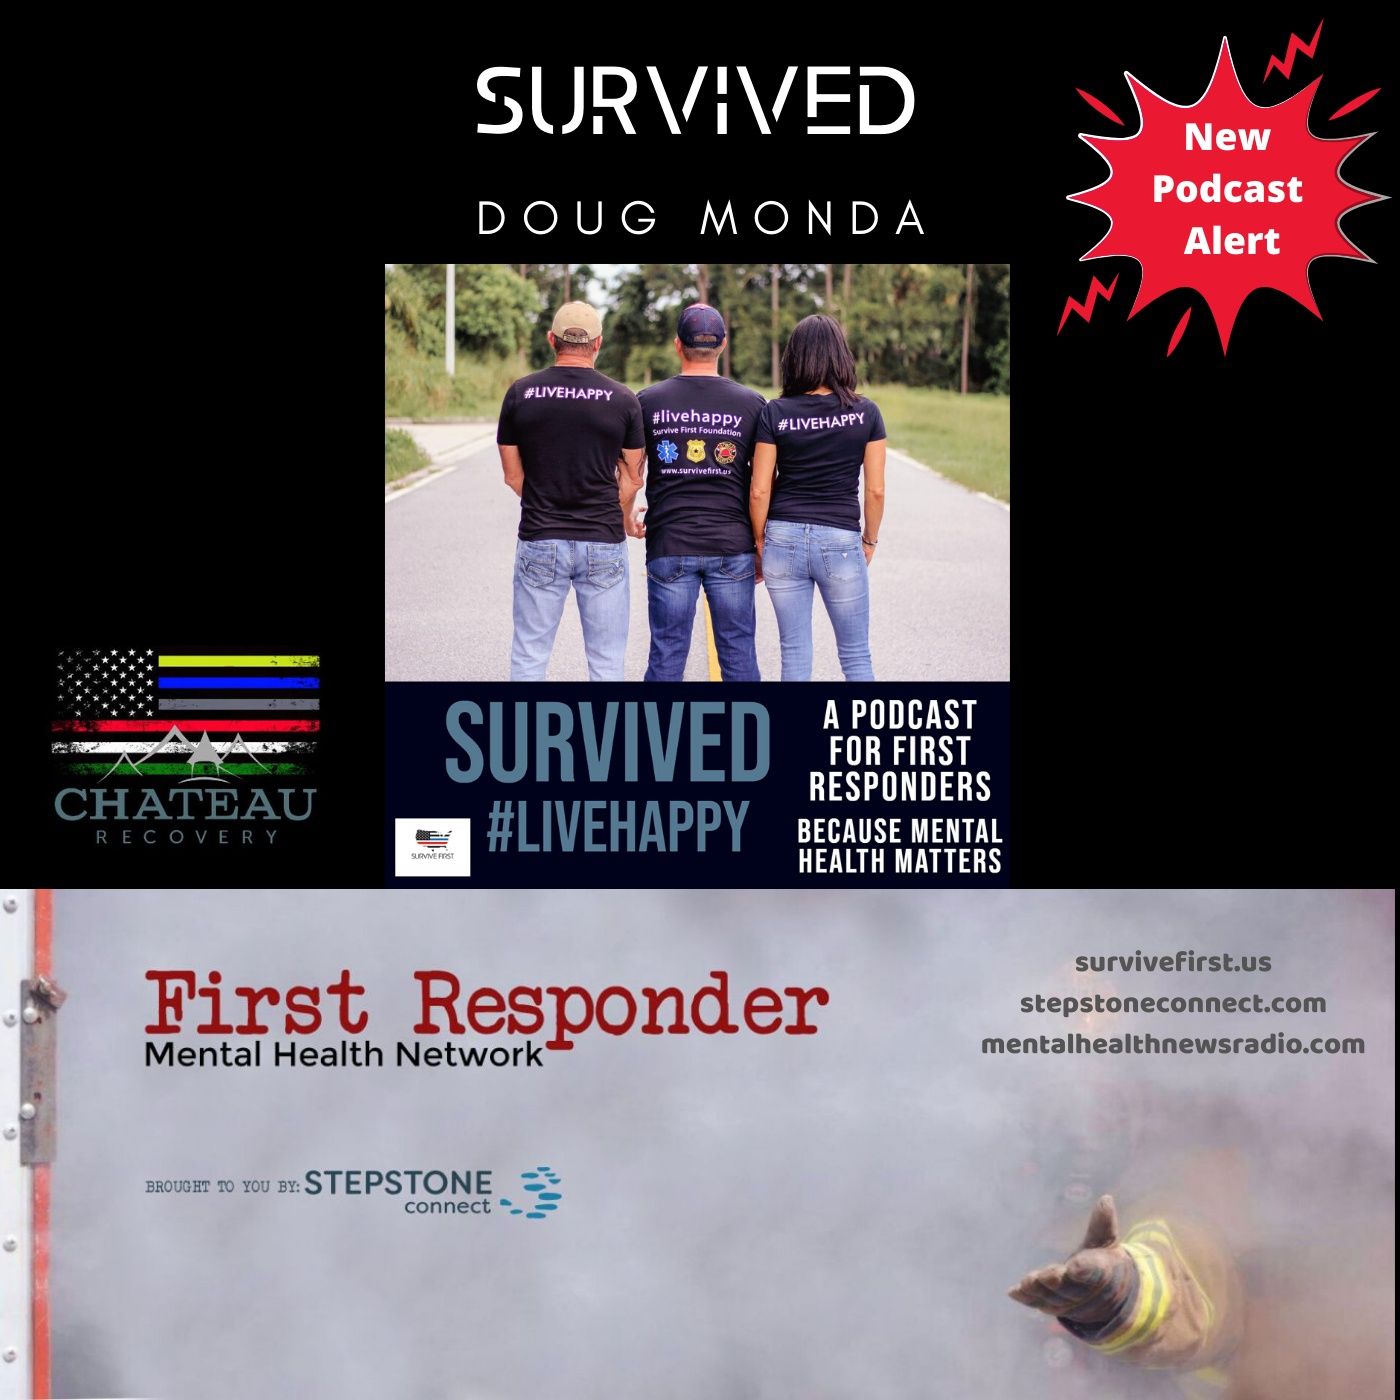 Mental Health News Radio - First Responders: Survived